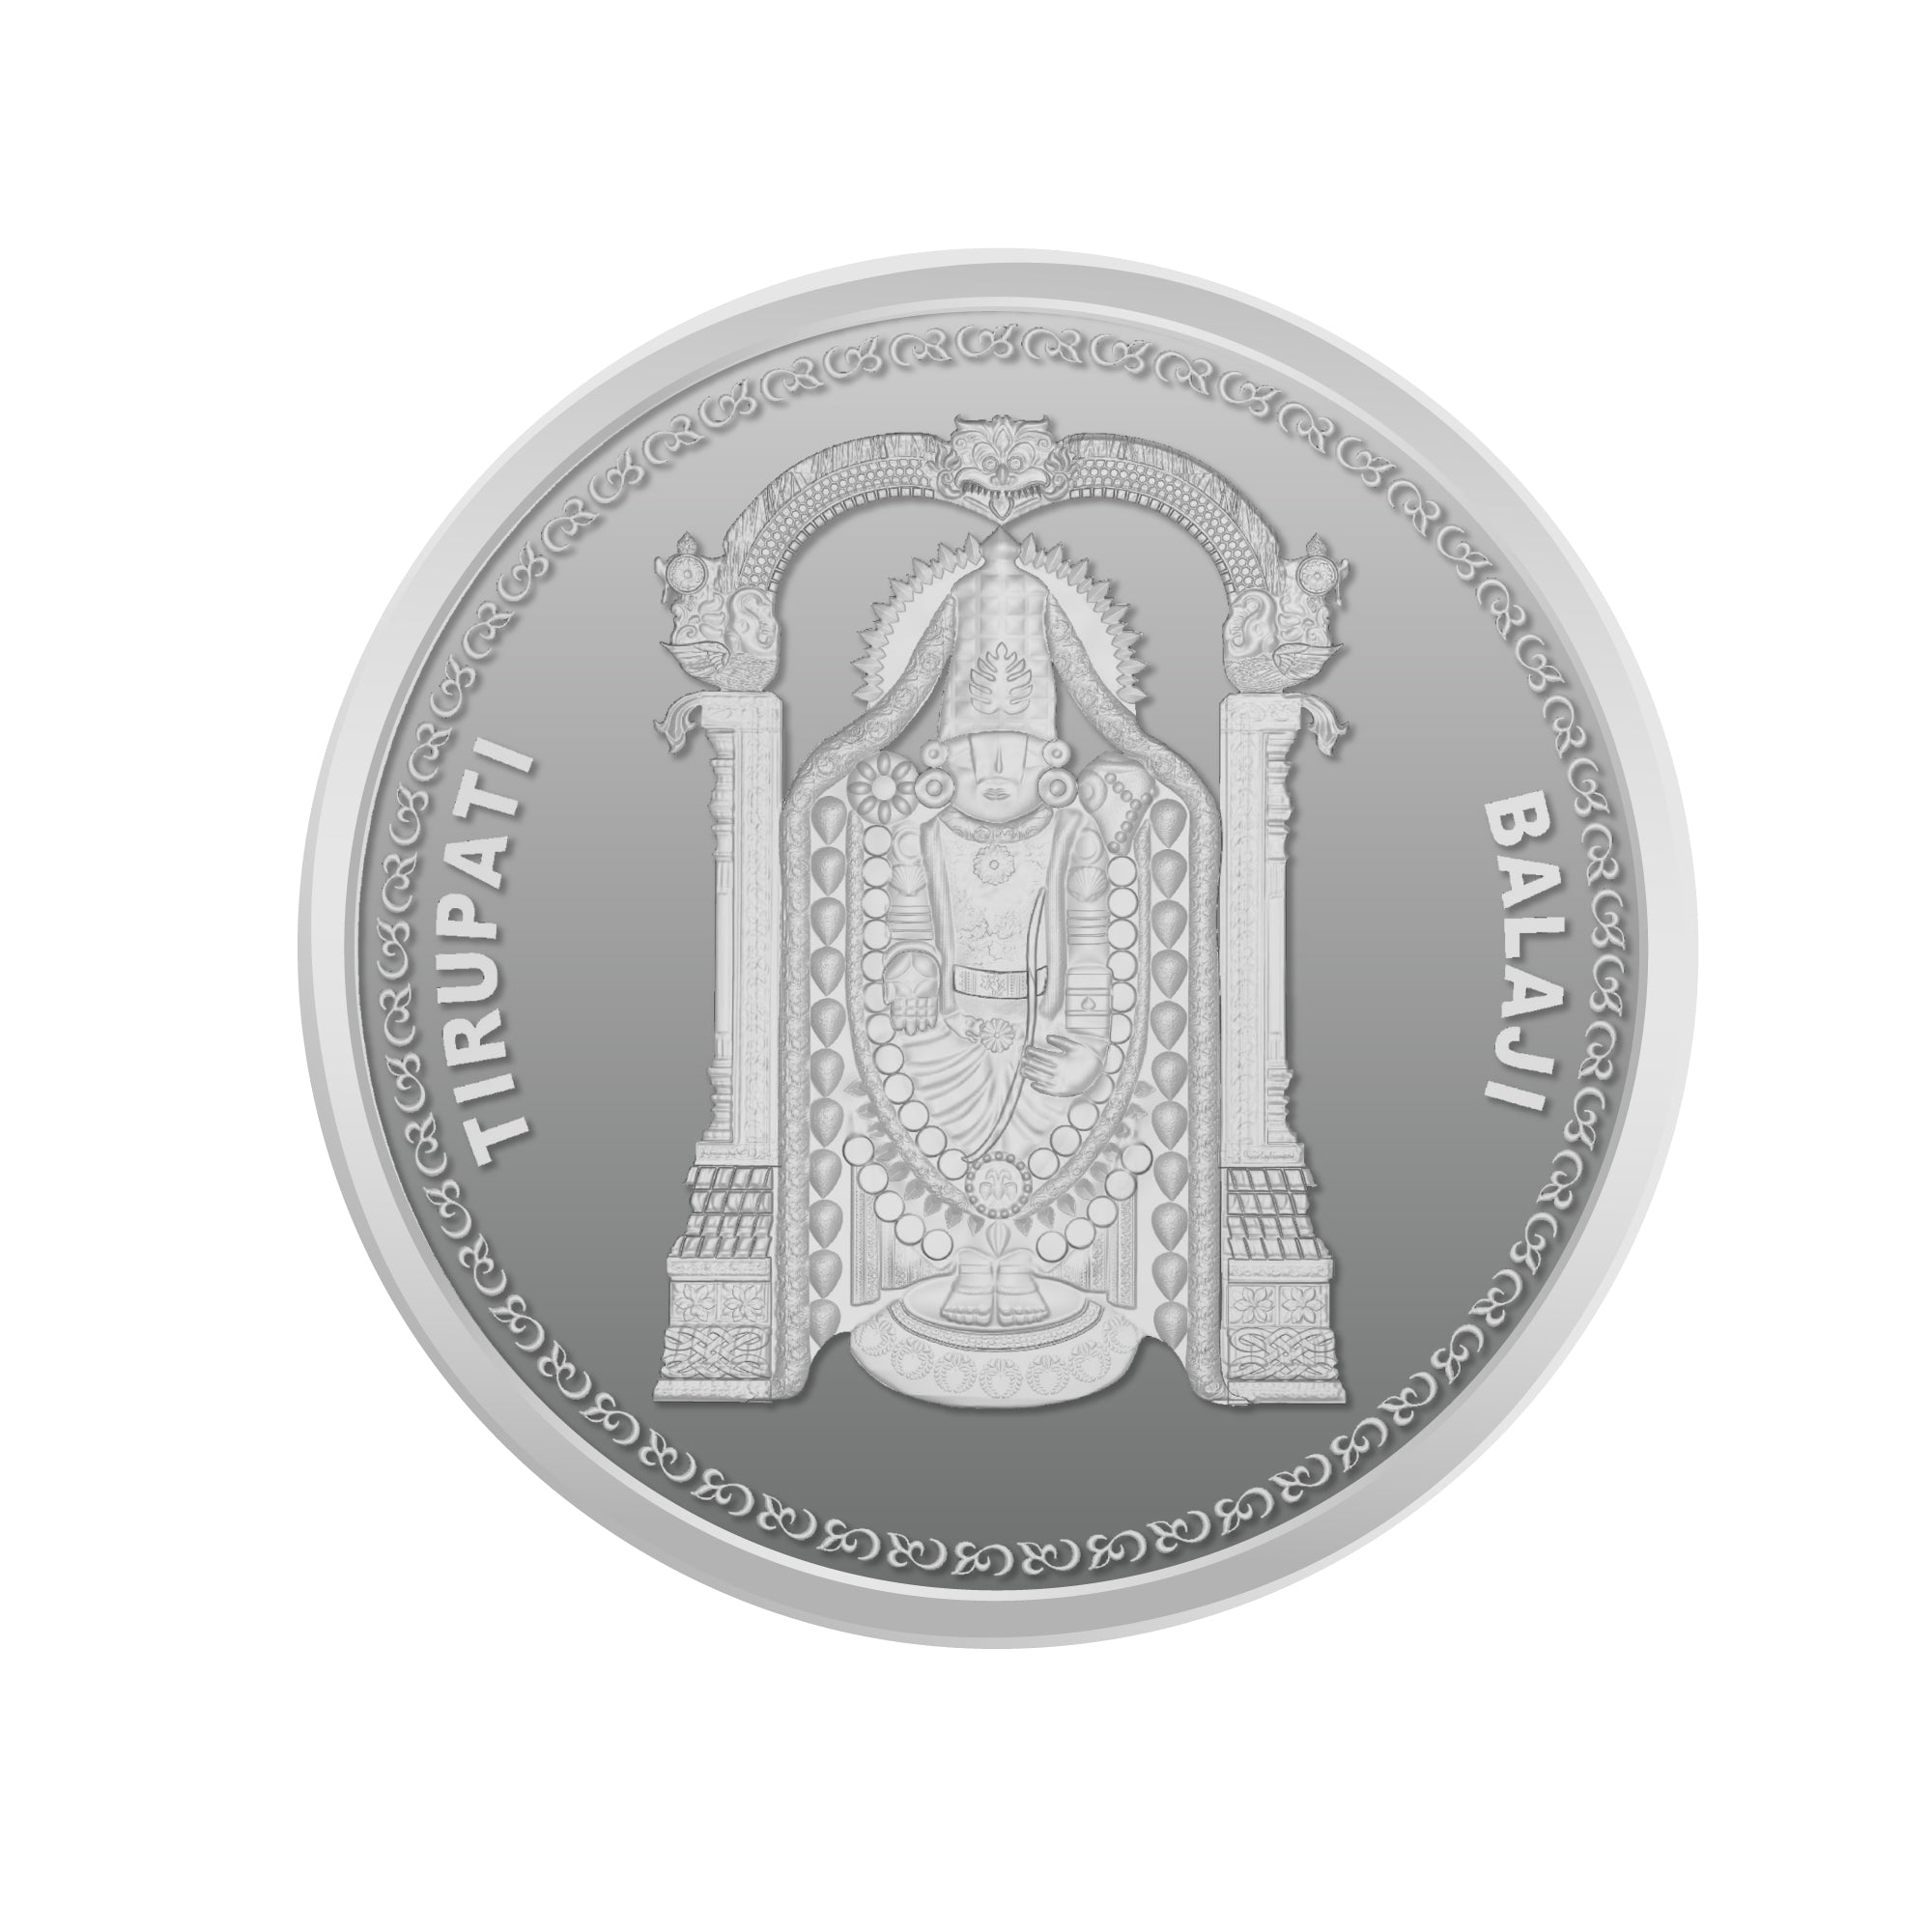 Tirupati Balaji Silver Coins 50 gm